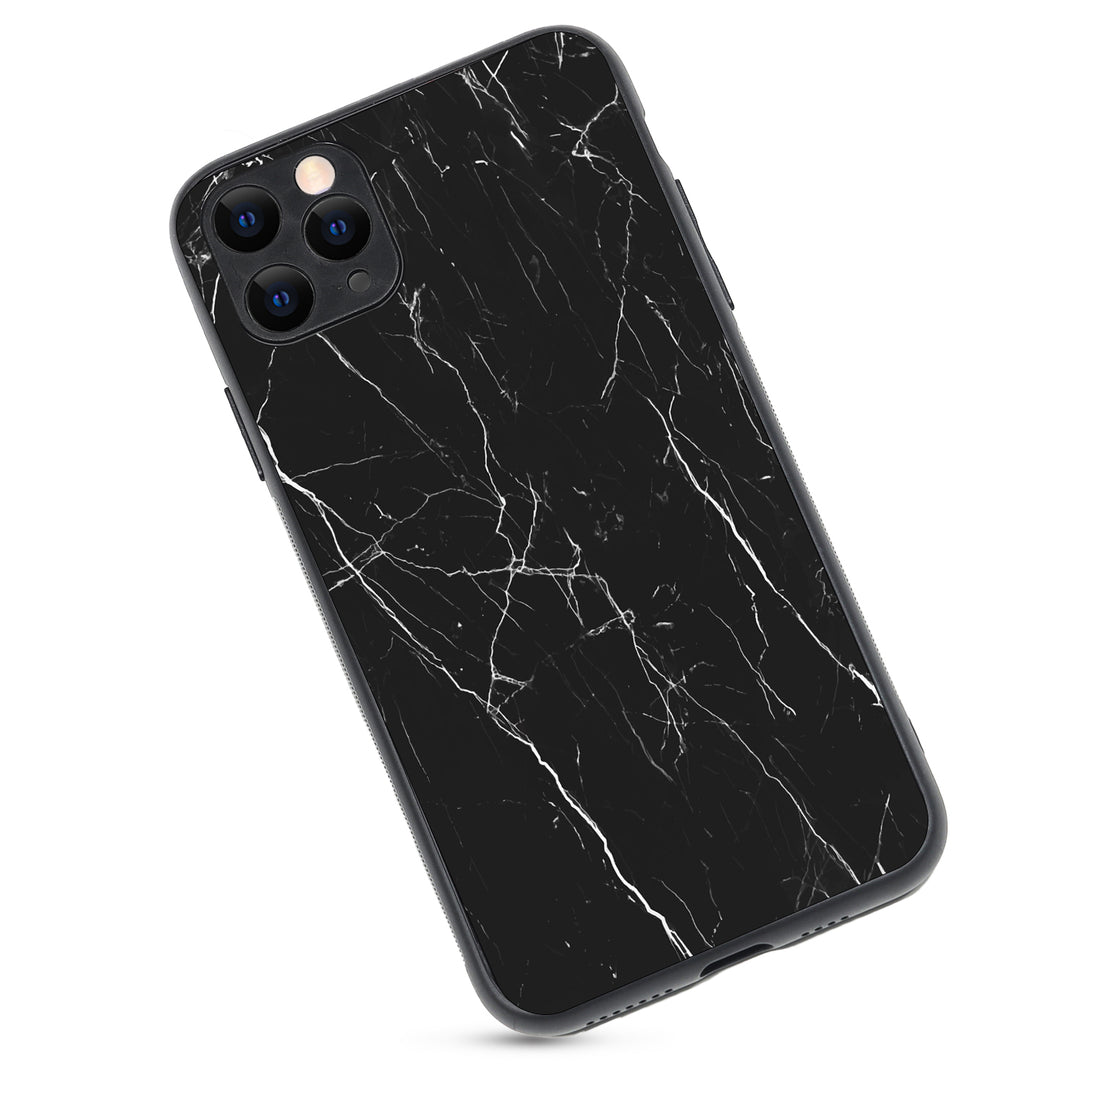 Black Tile Marble iPhone 11 Pro Max Case